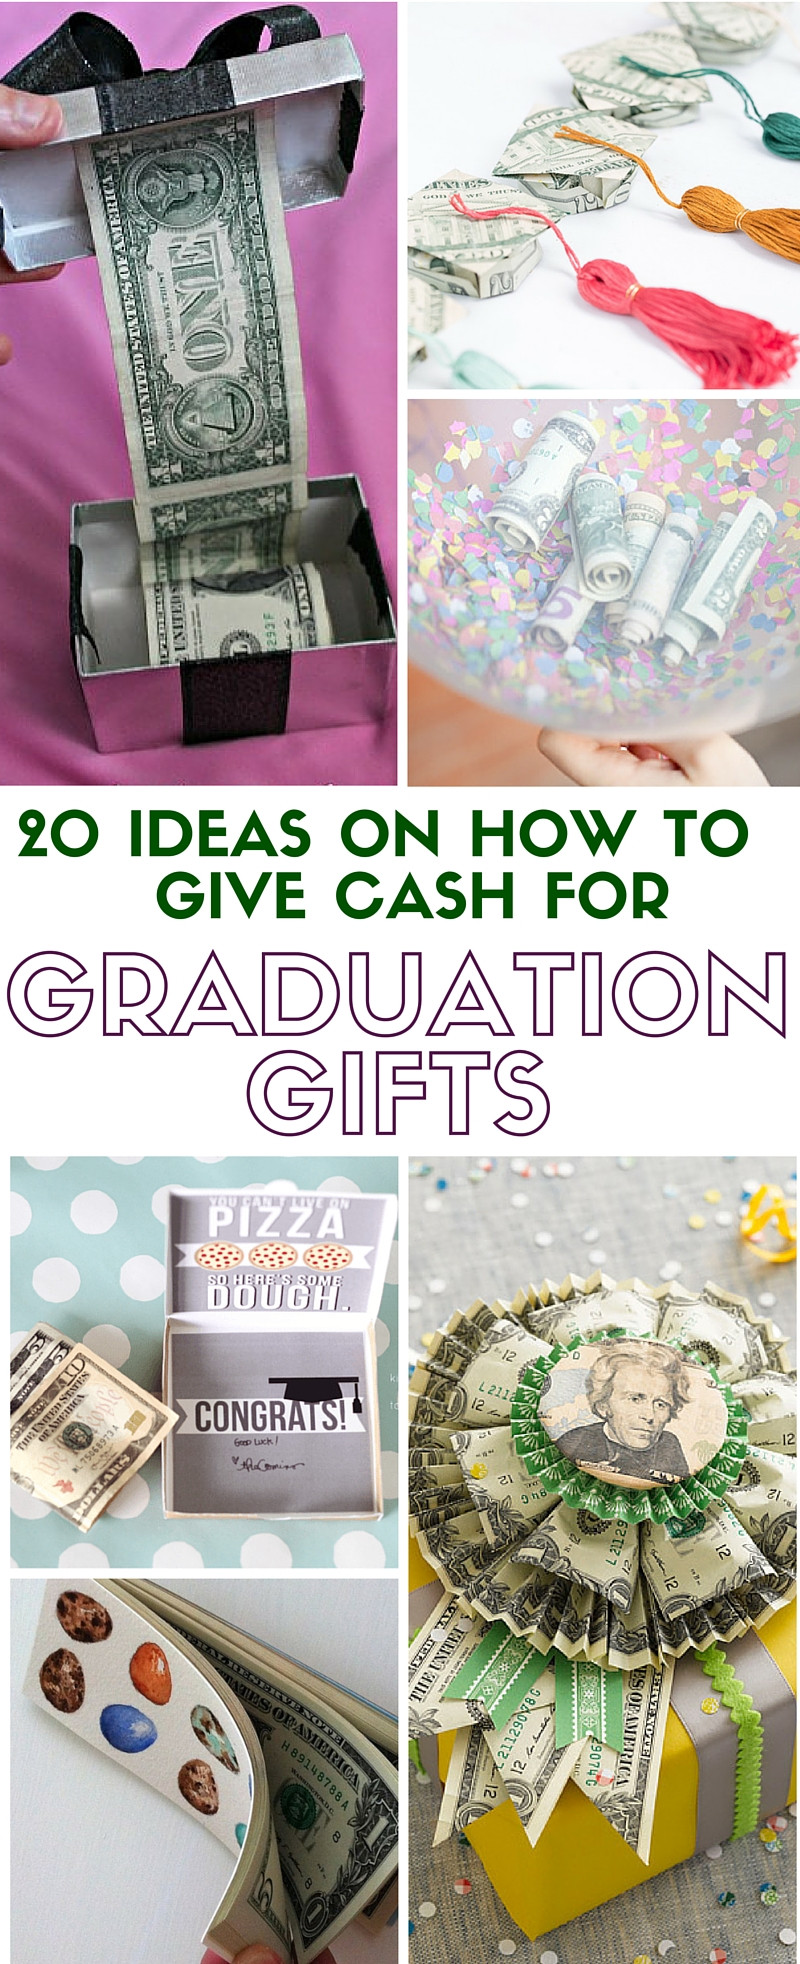 Fun High School Graduation Gift Ideas
 31 Back To School Teacher Gift Ideas The Crafty Blog Stalker